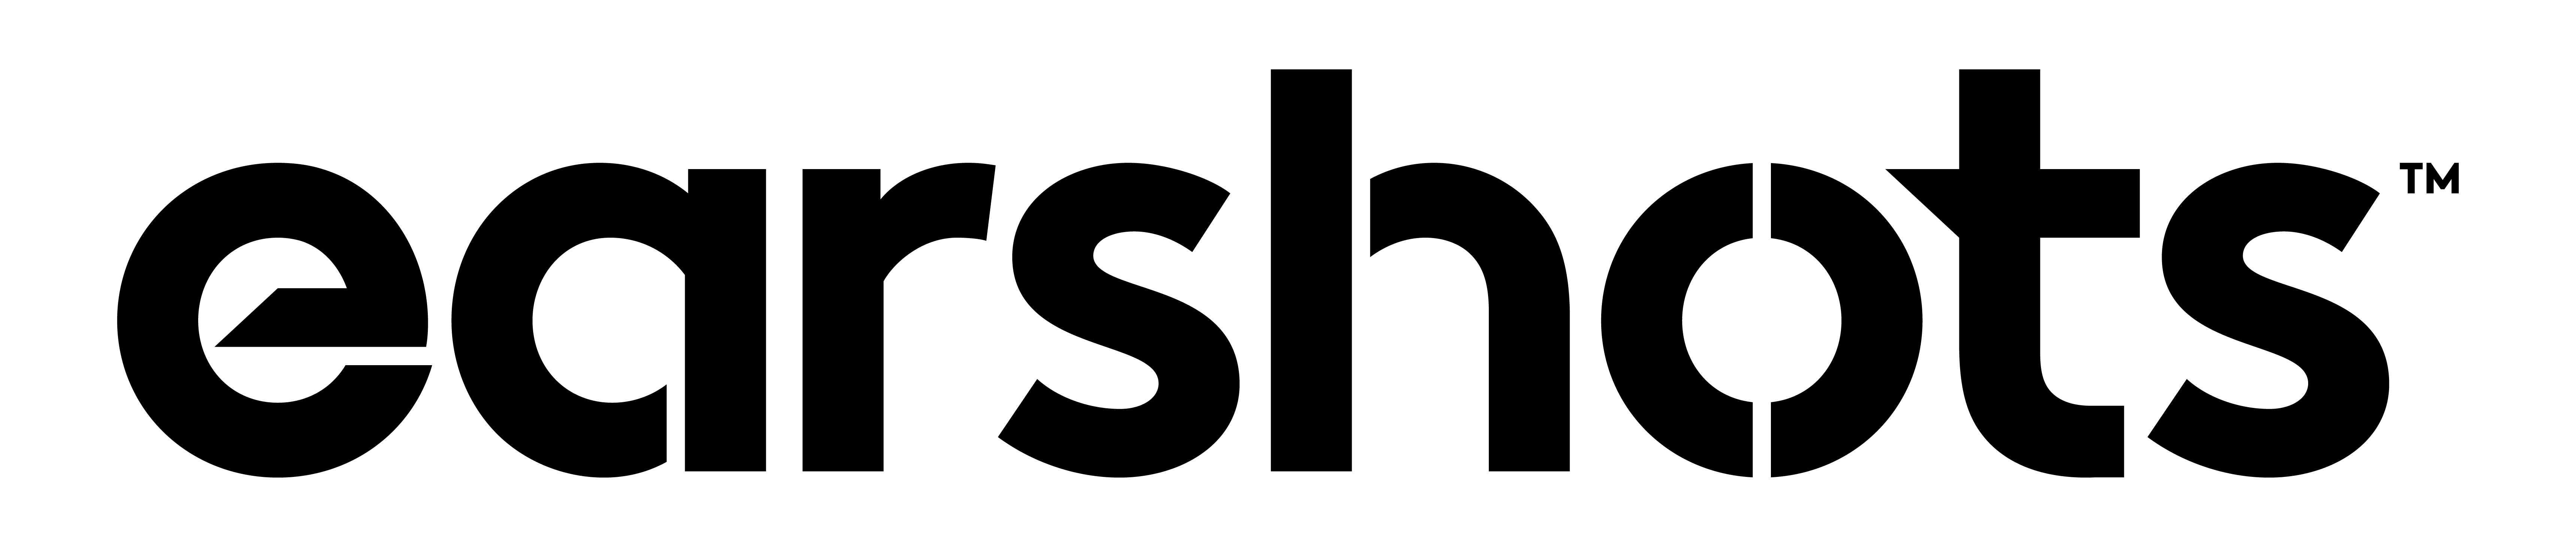 Earshot Logo